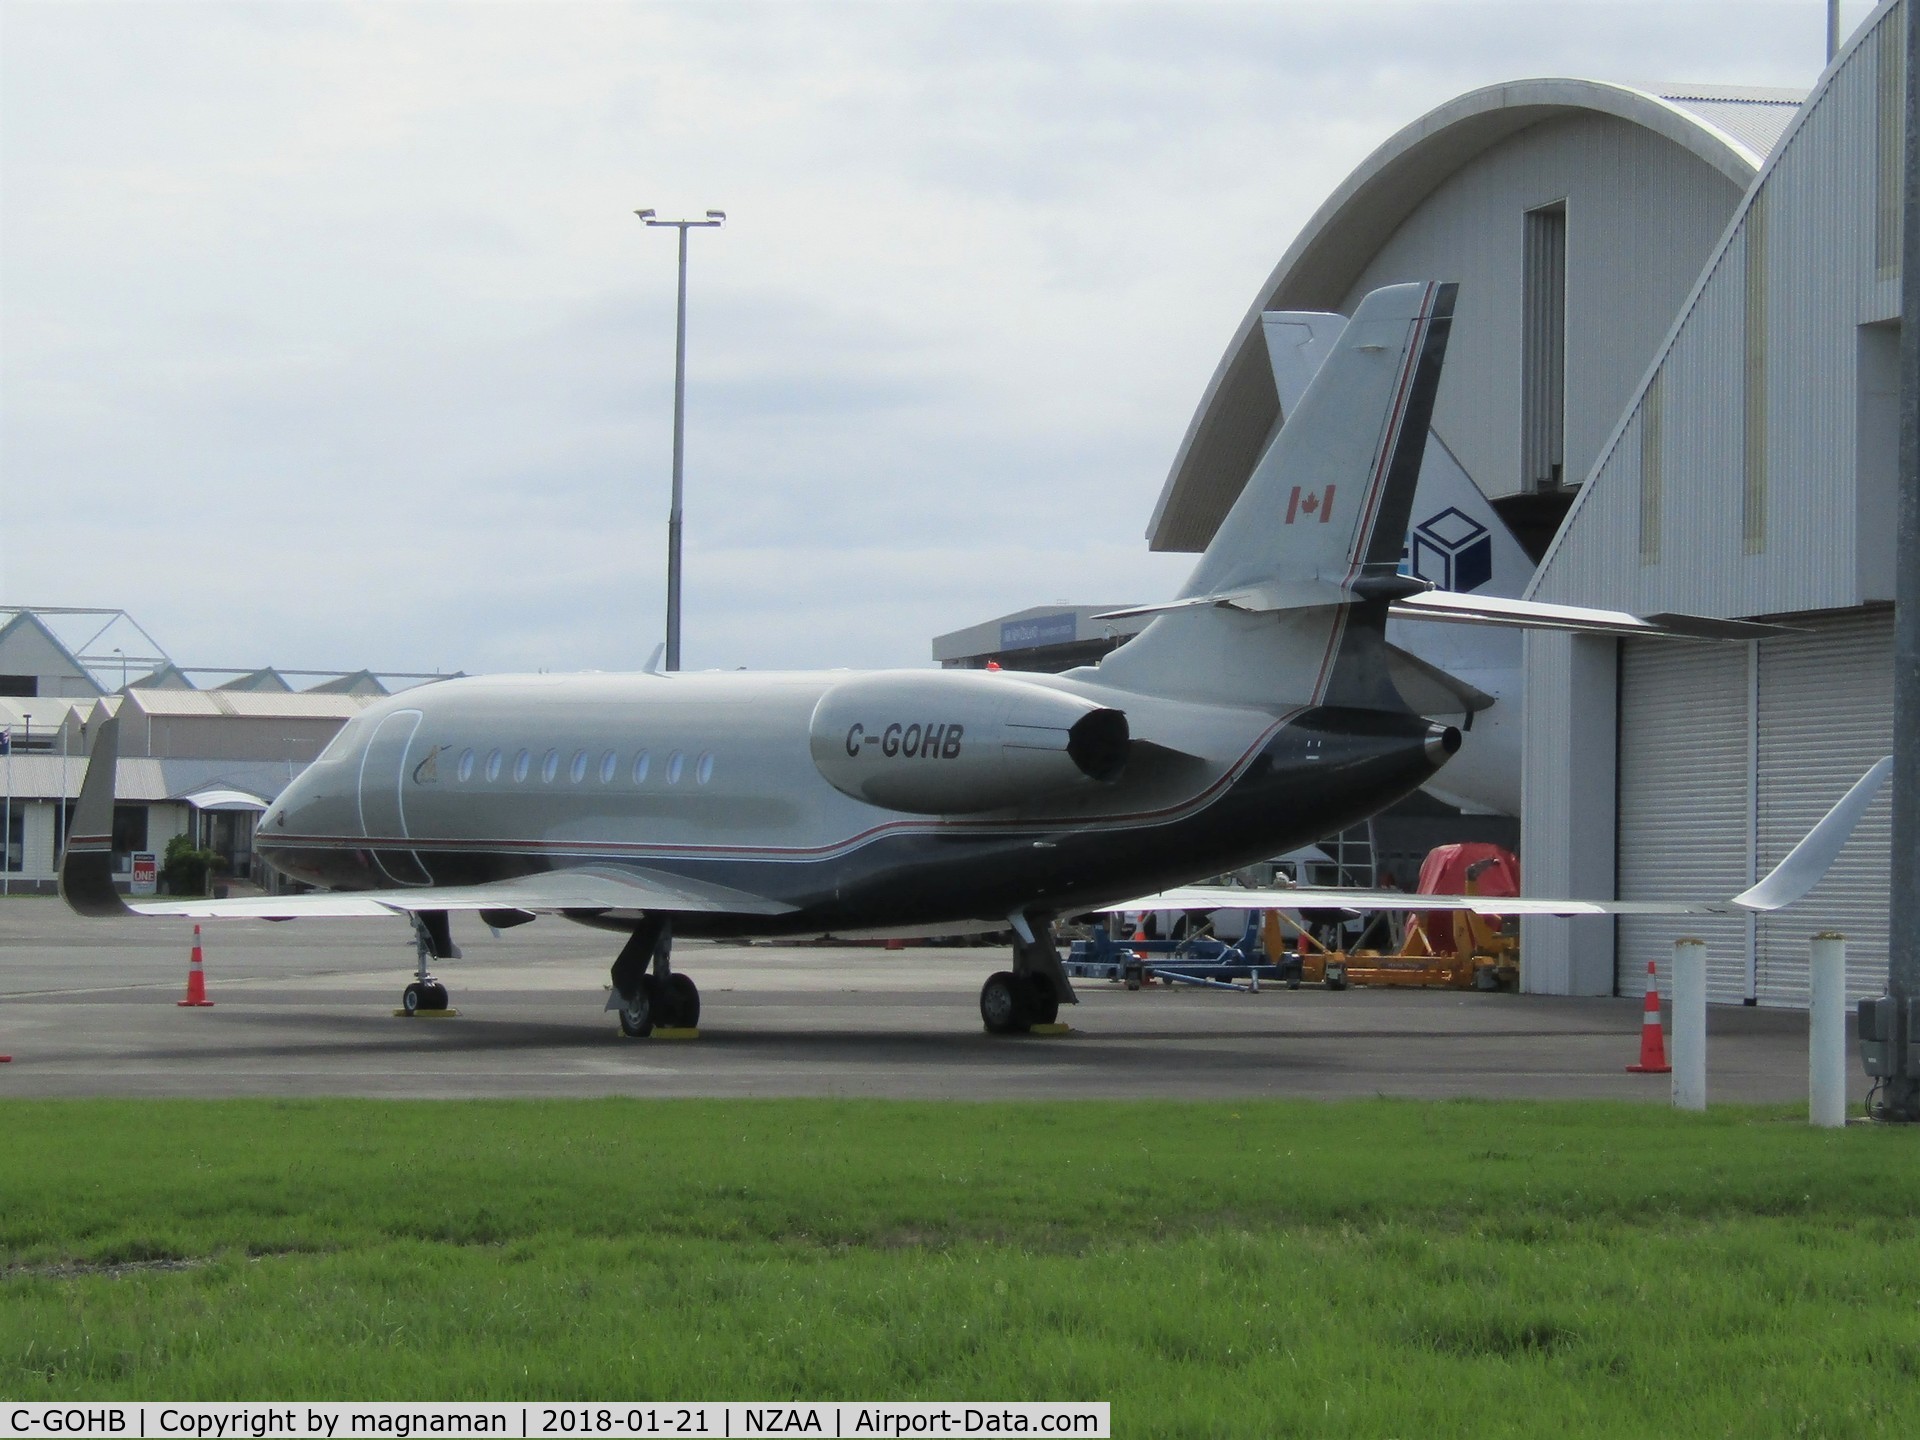 C-GOHB, 2011 Dassault Falcon 2000LX C/N 232, last saw this at Luton in 2016